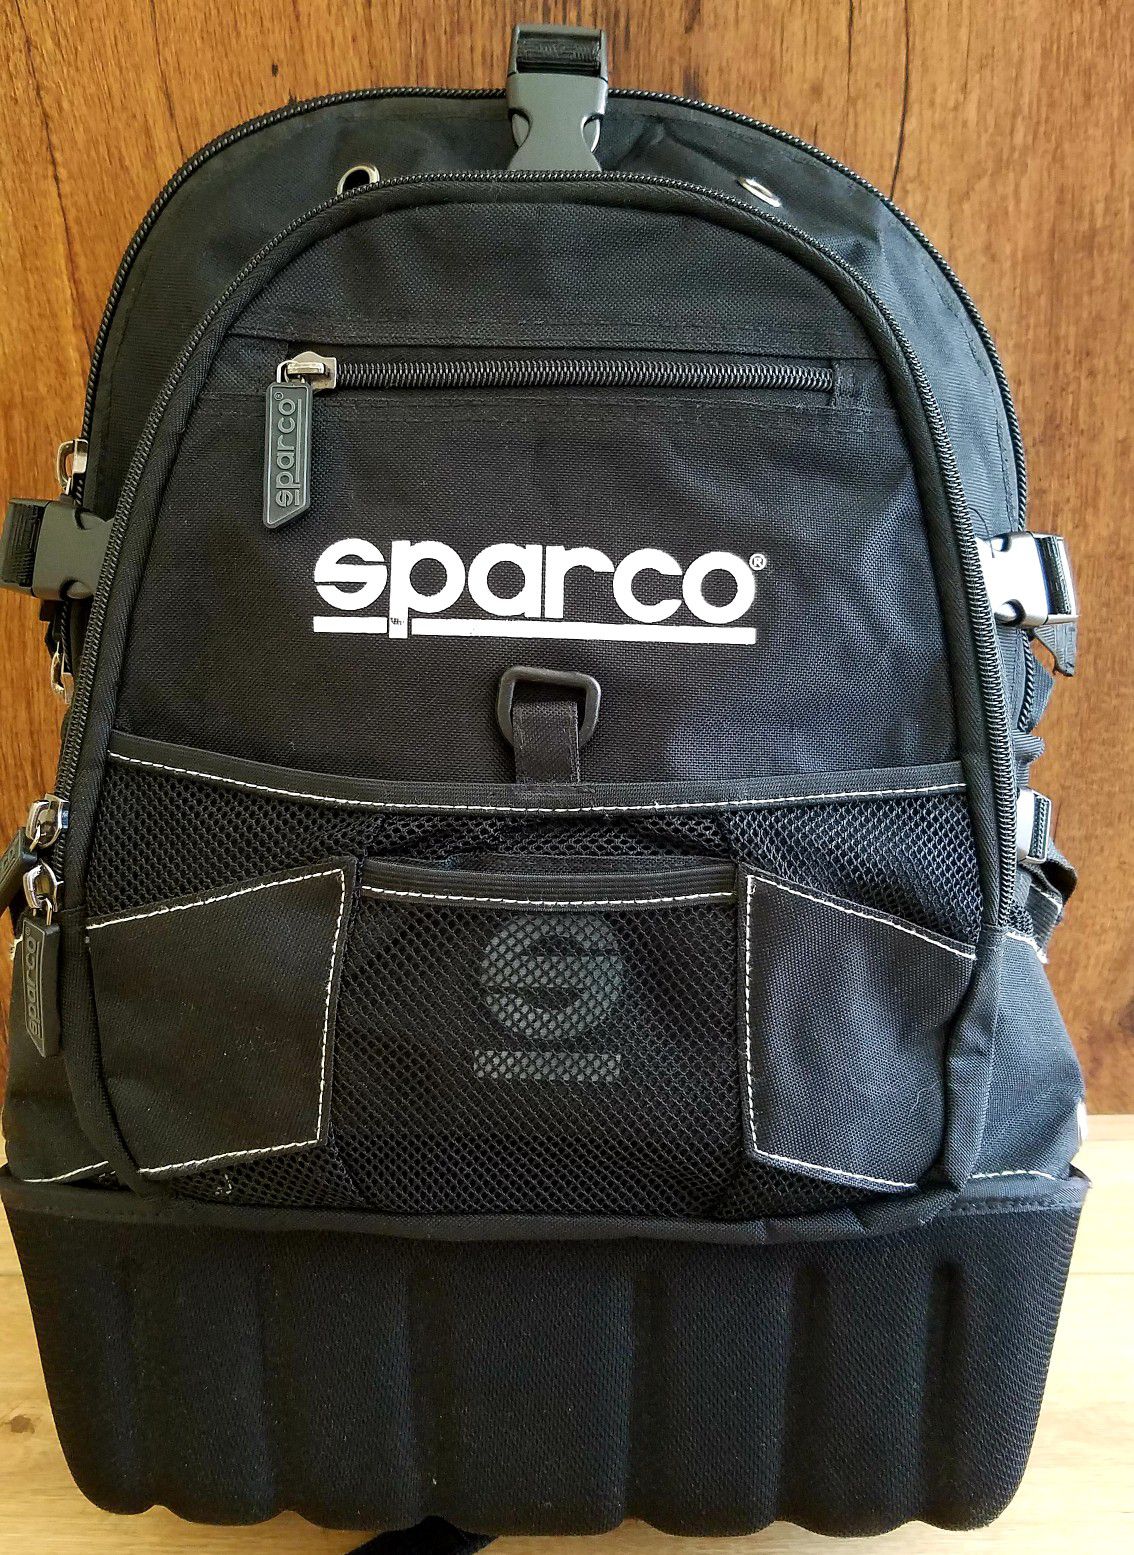 Sparco Hard Bottom backpack